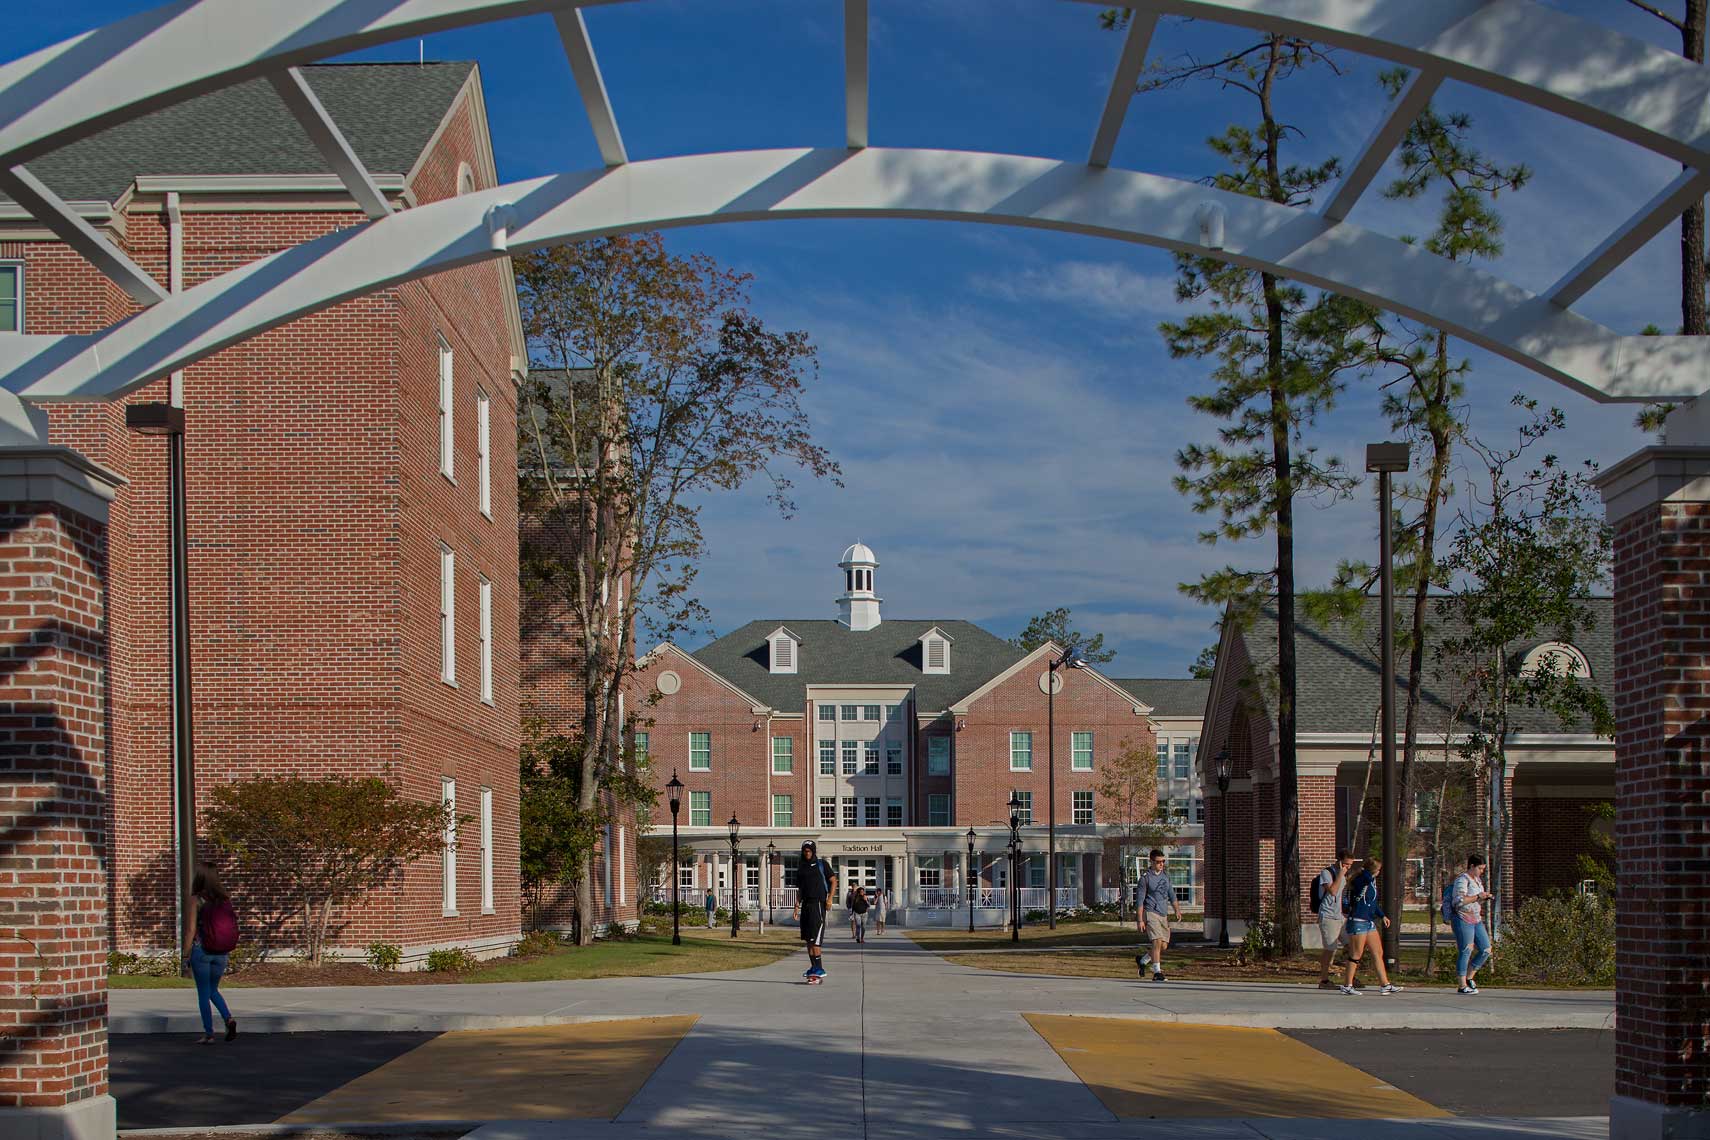 An exterior view of the walkway at Coastal Carolina University’s Student Housing